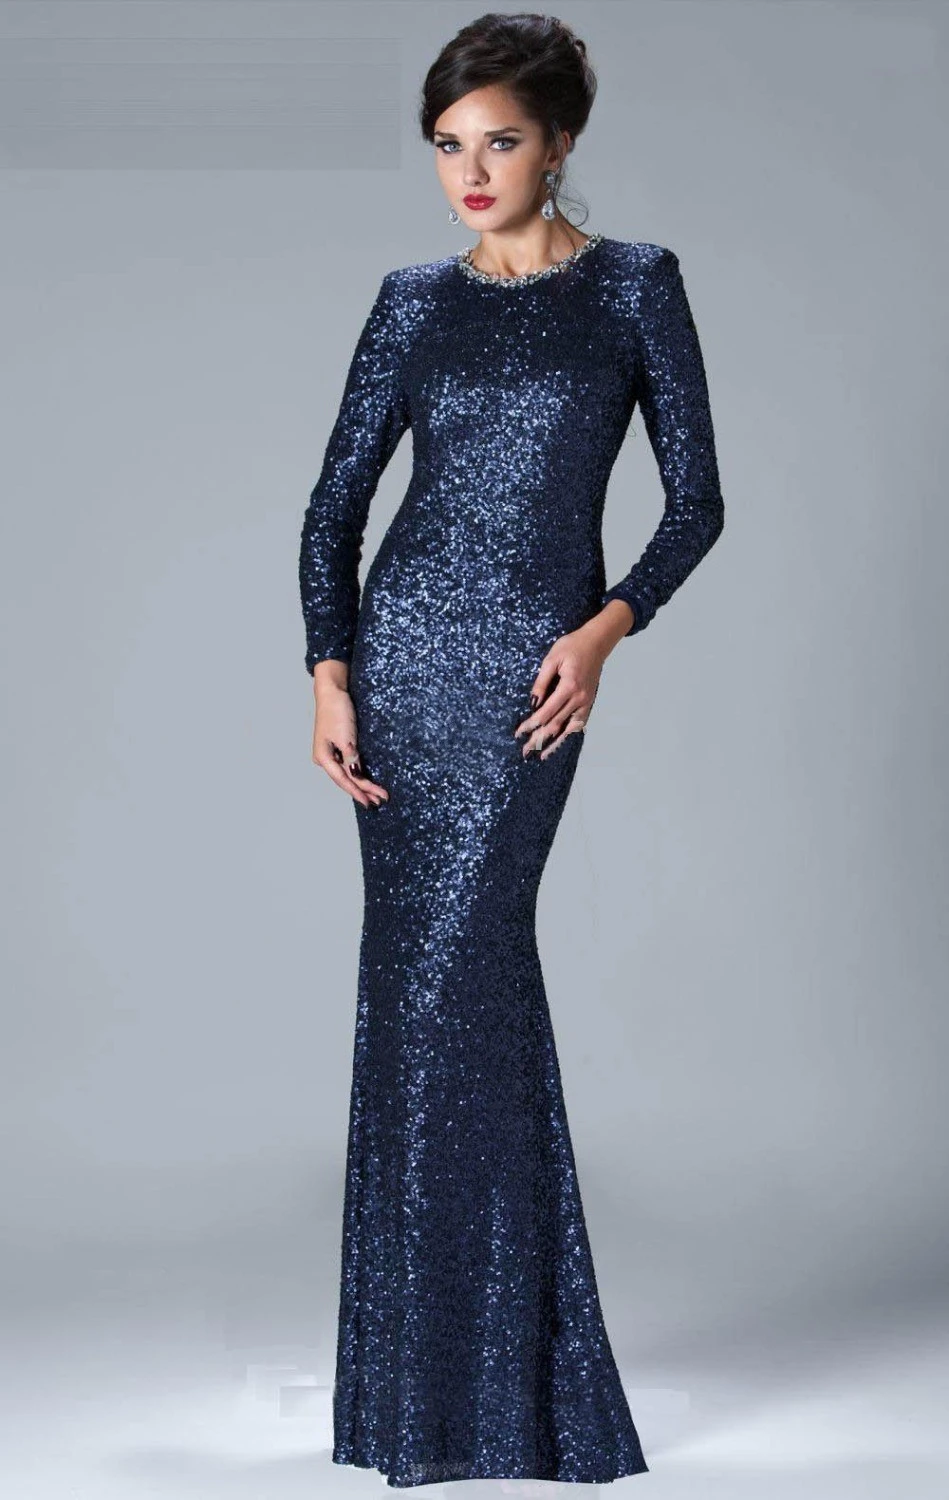 XPLE Mermaid High Collar Long Sleeves Navy Blue Sparkle Sequins Elegant Long Evening Dresses 